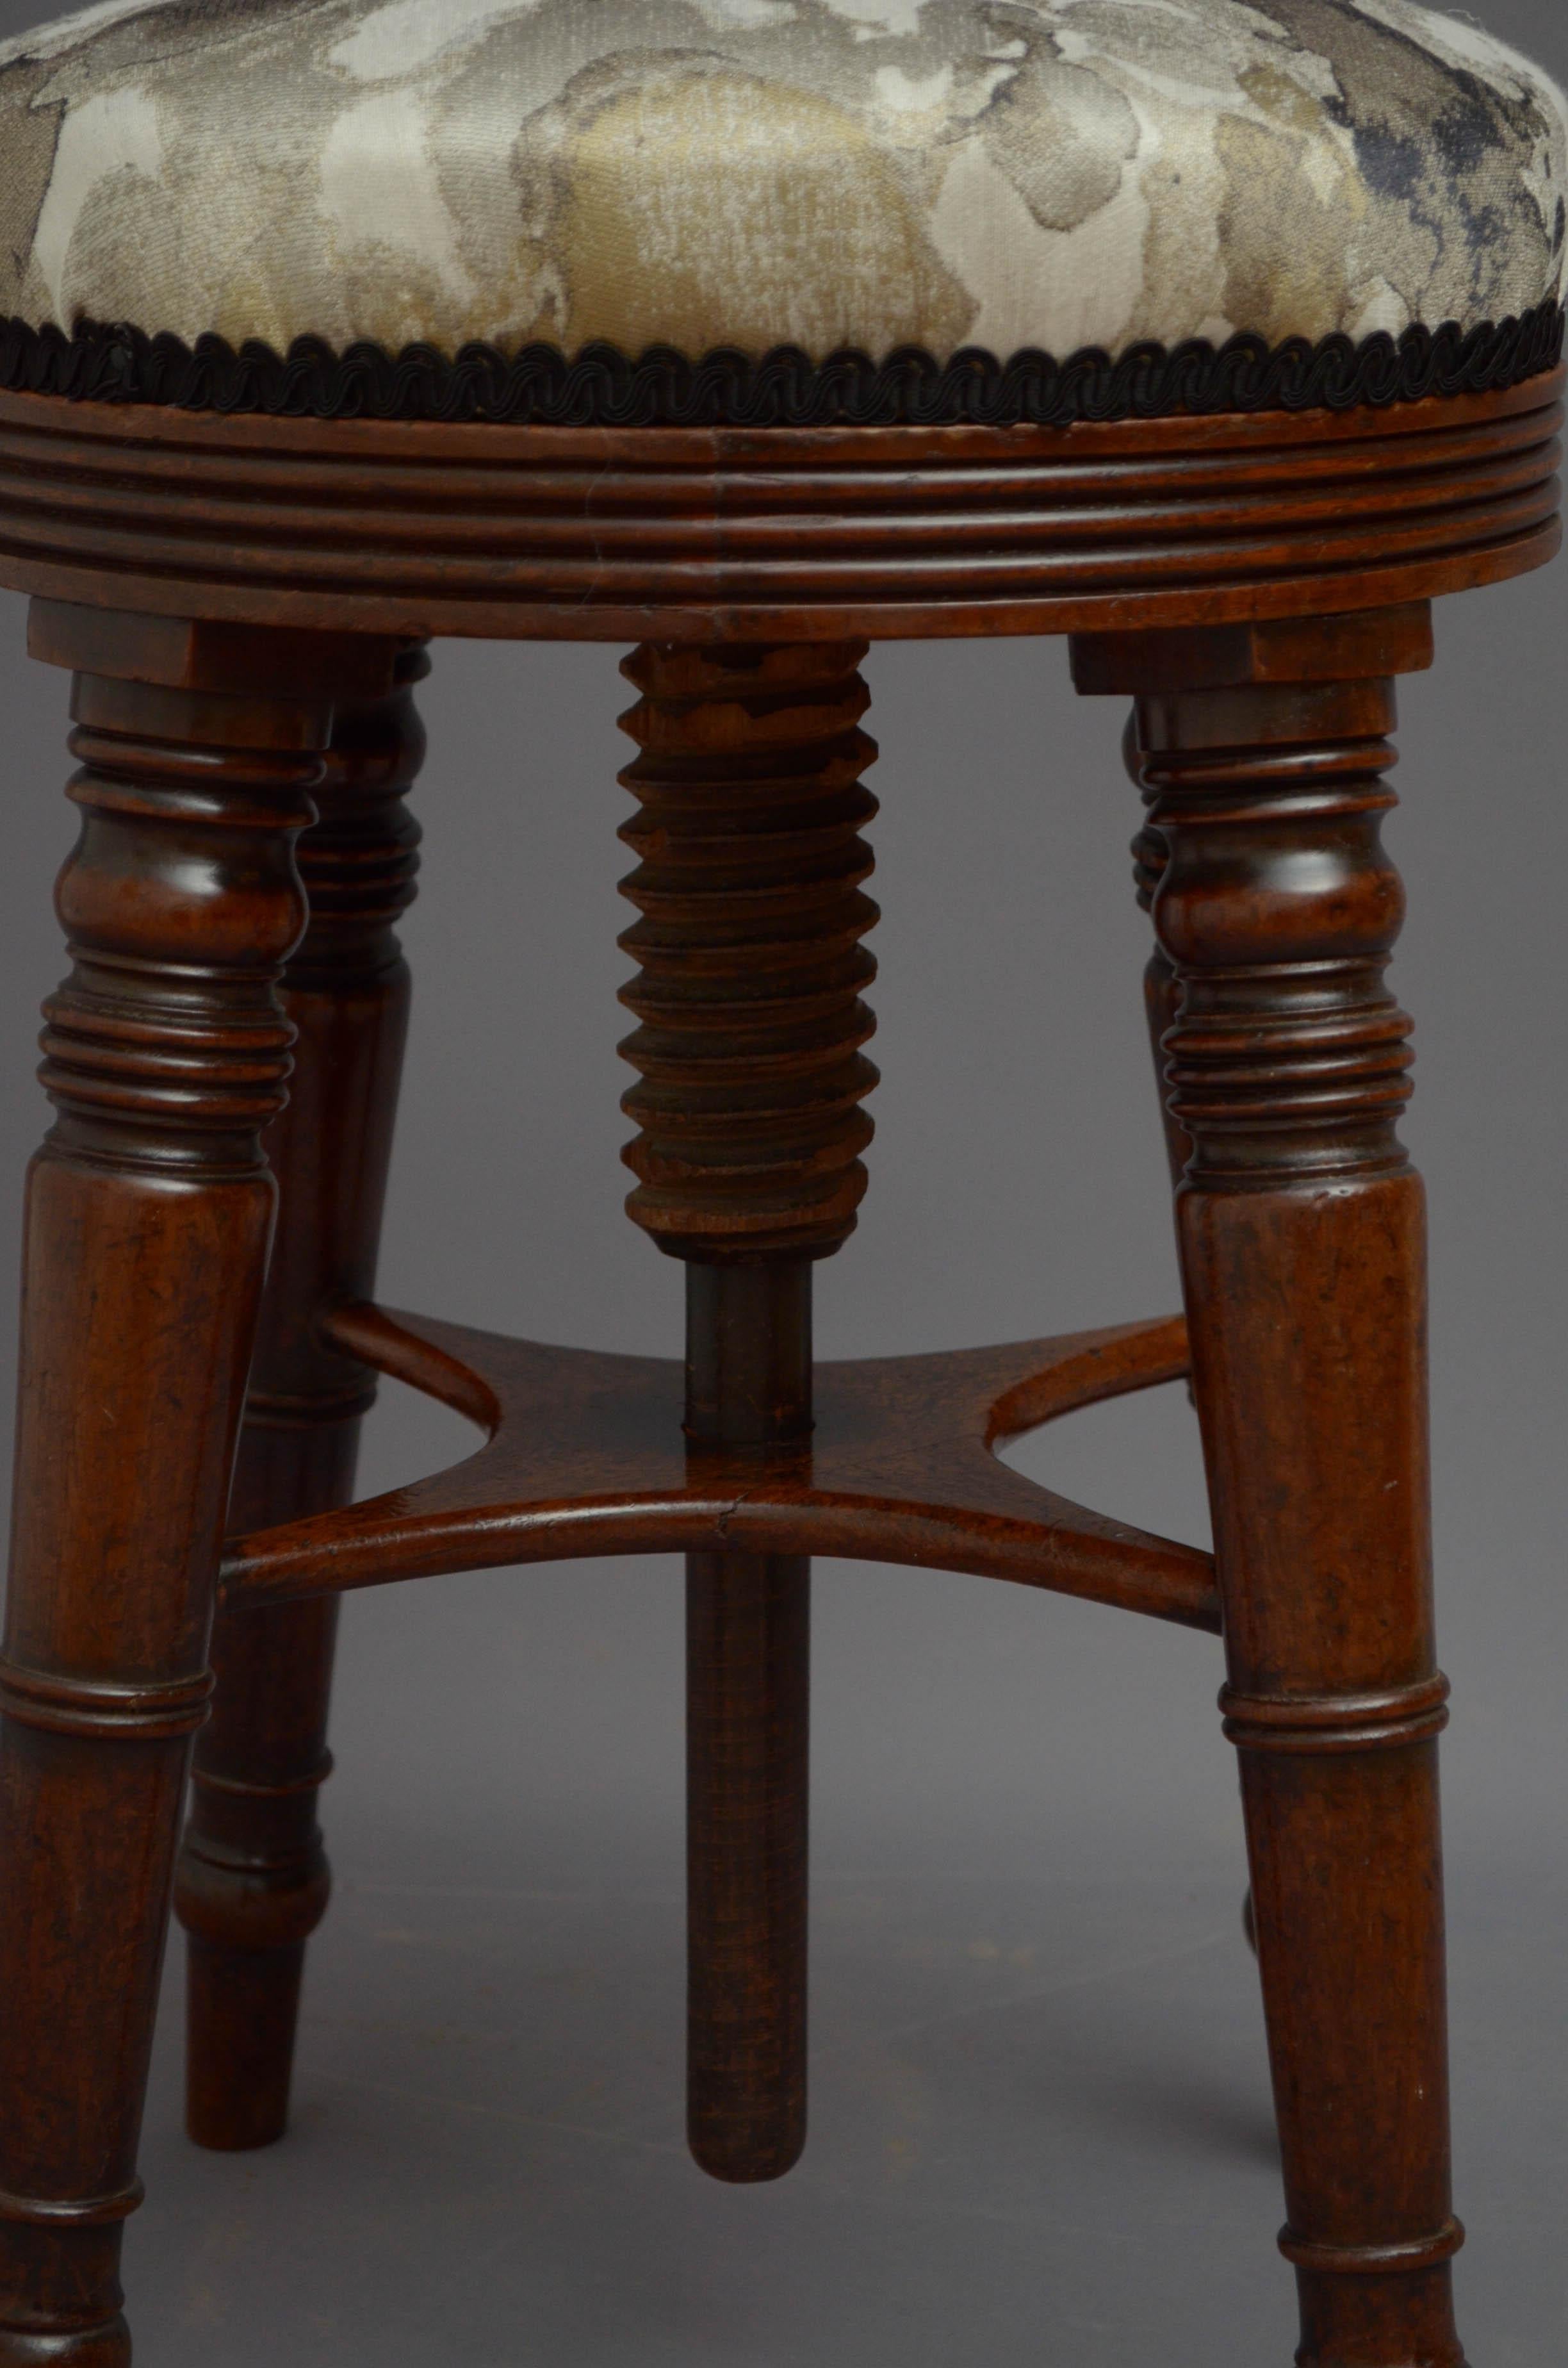 Early 19th Century Regency Mahogany Height Adjustable Stool For Sale